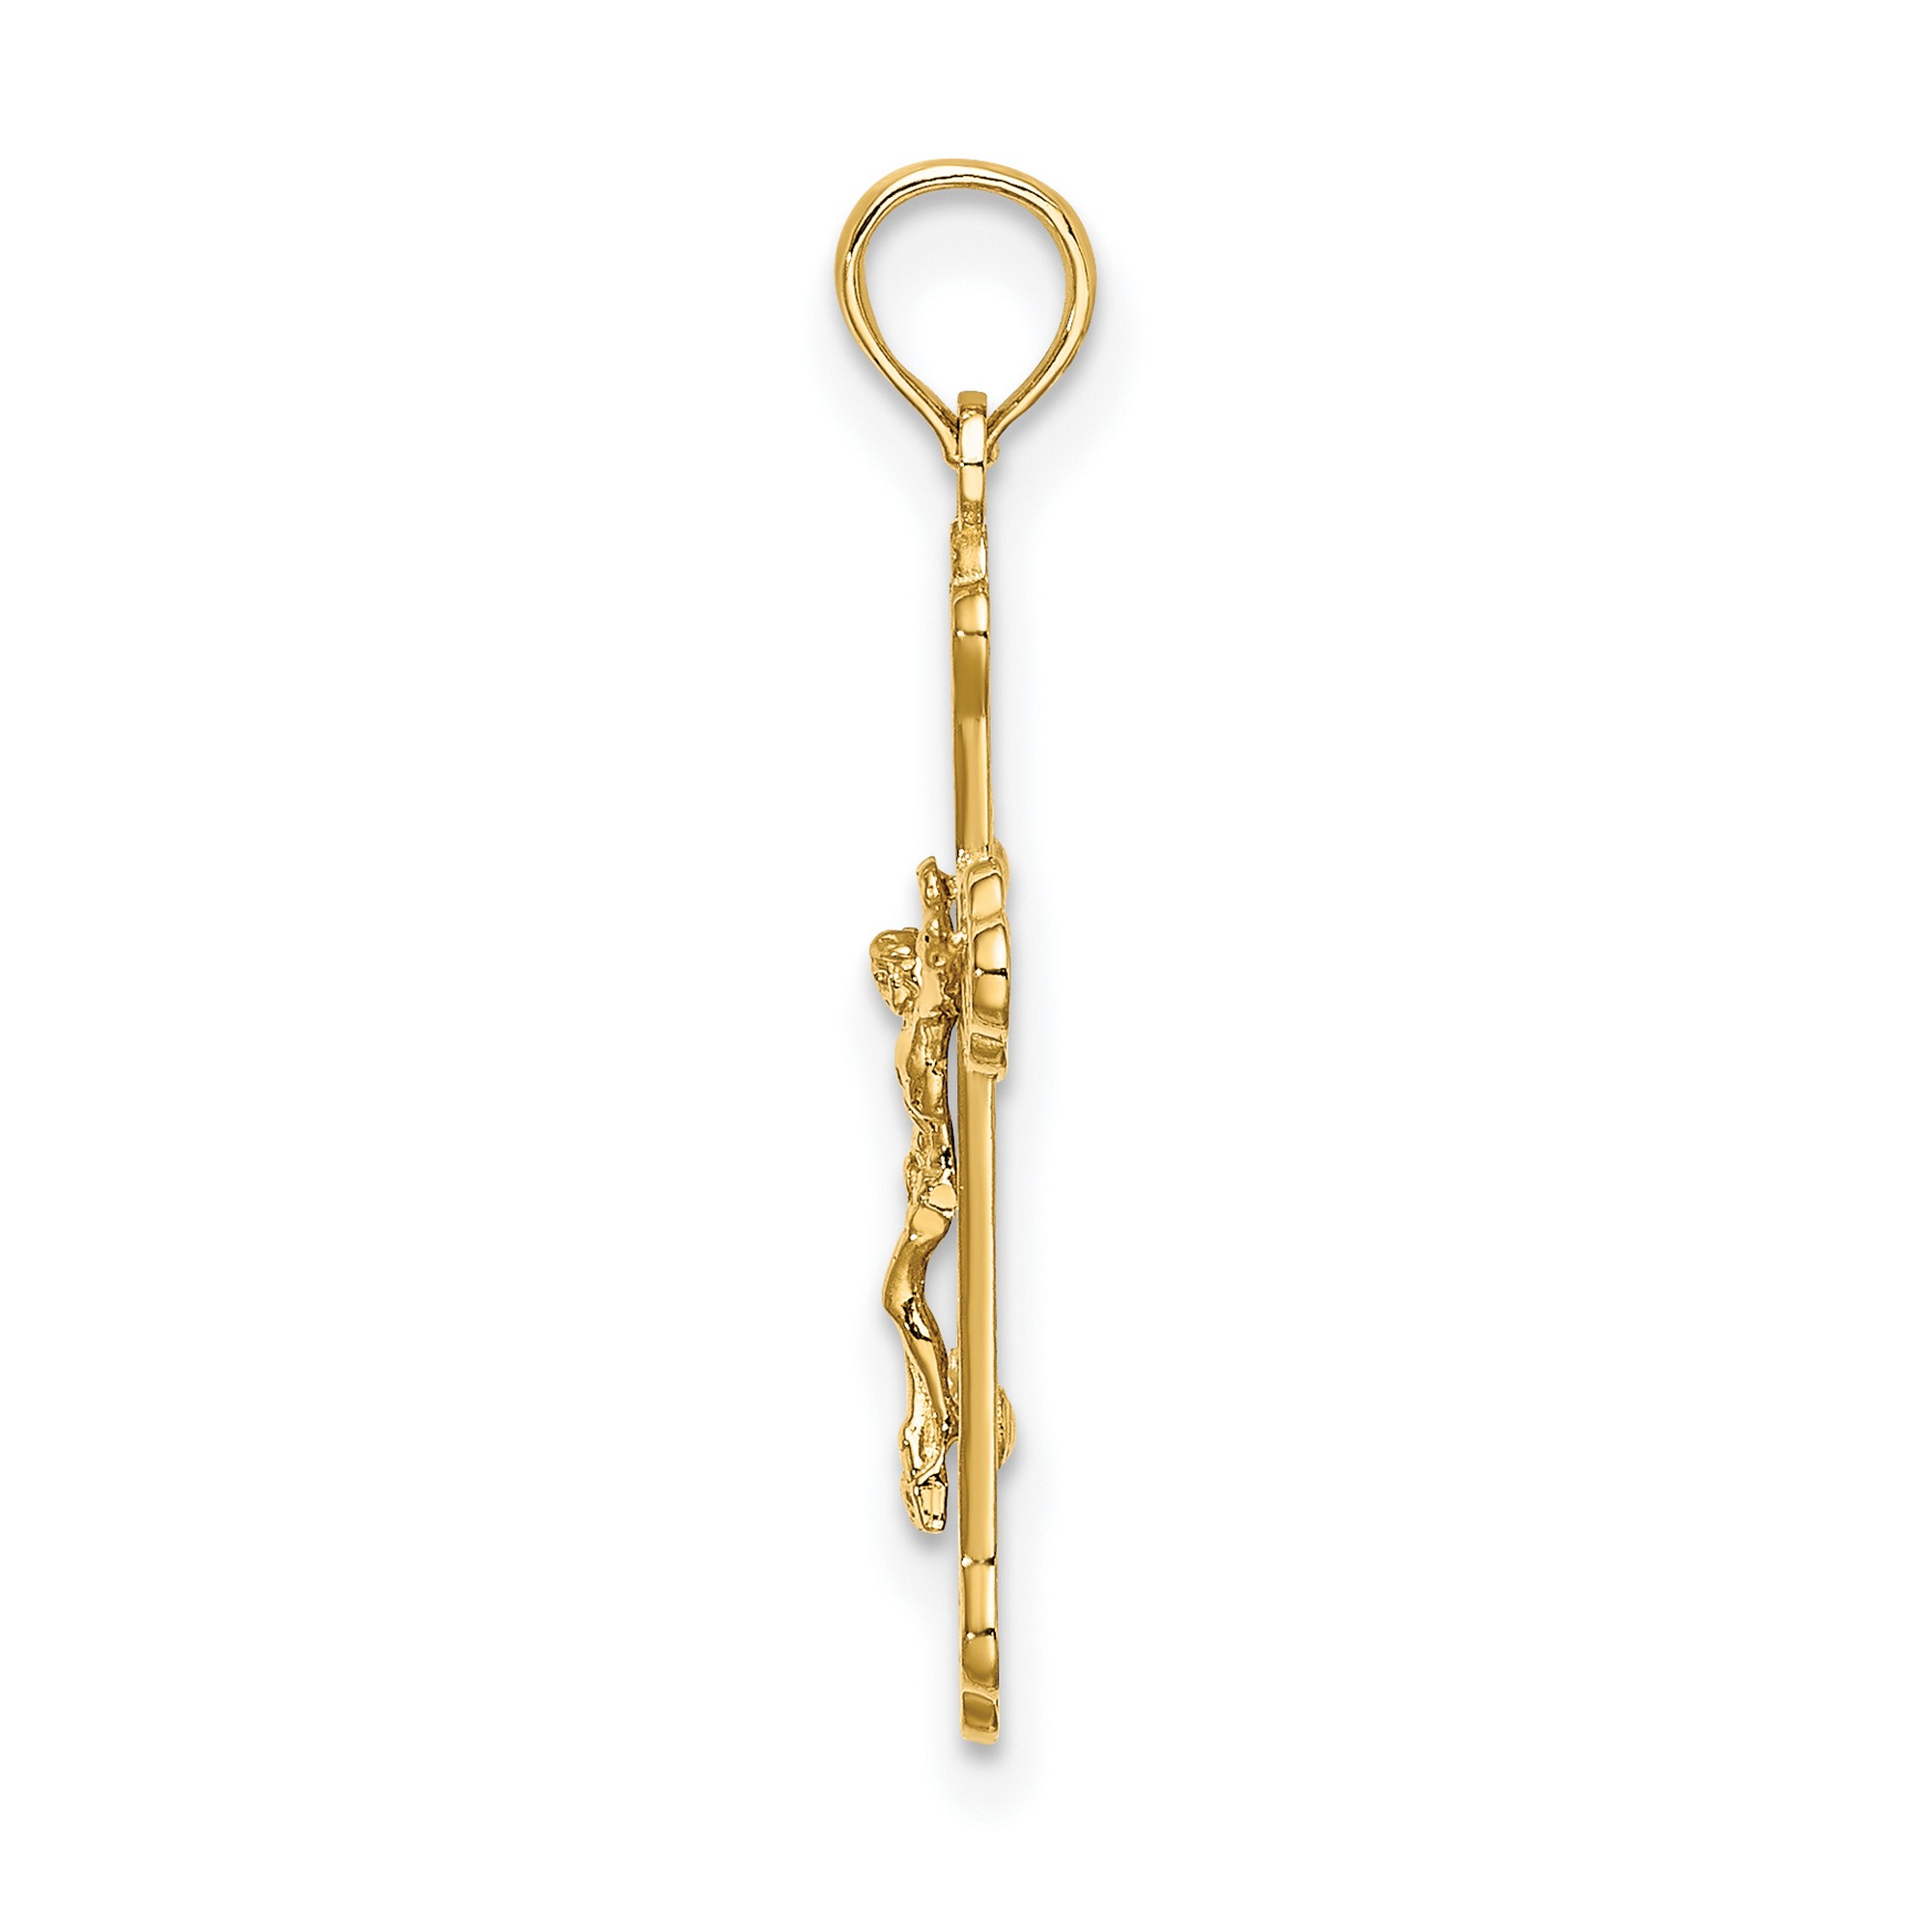 Inri Crucifix Scroll Tips Charm In Real 14k Yellow Gold 0.80gr | eBay